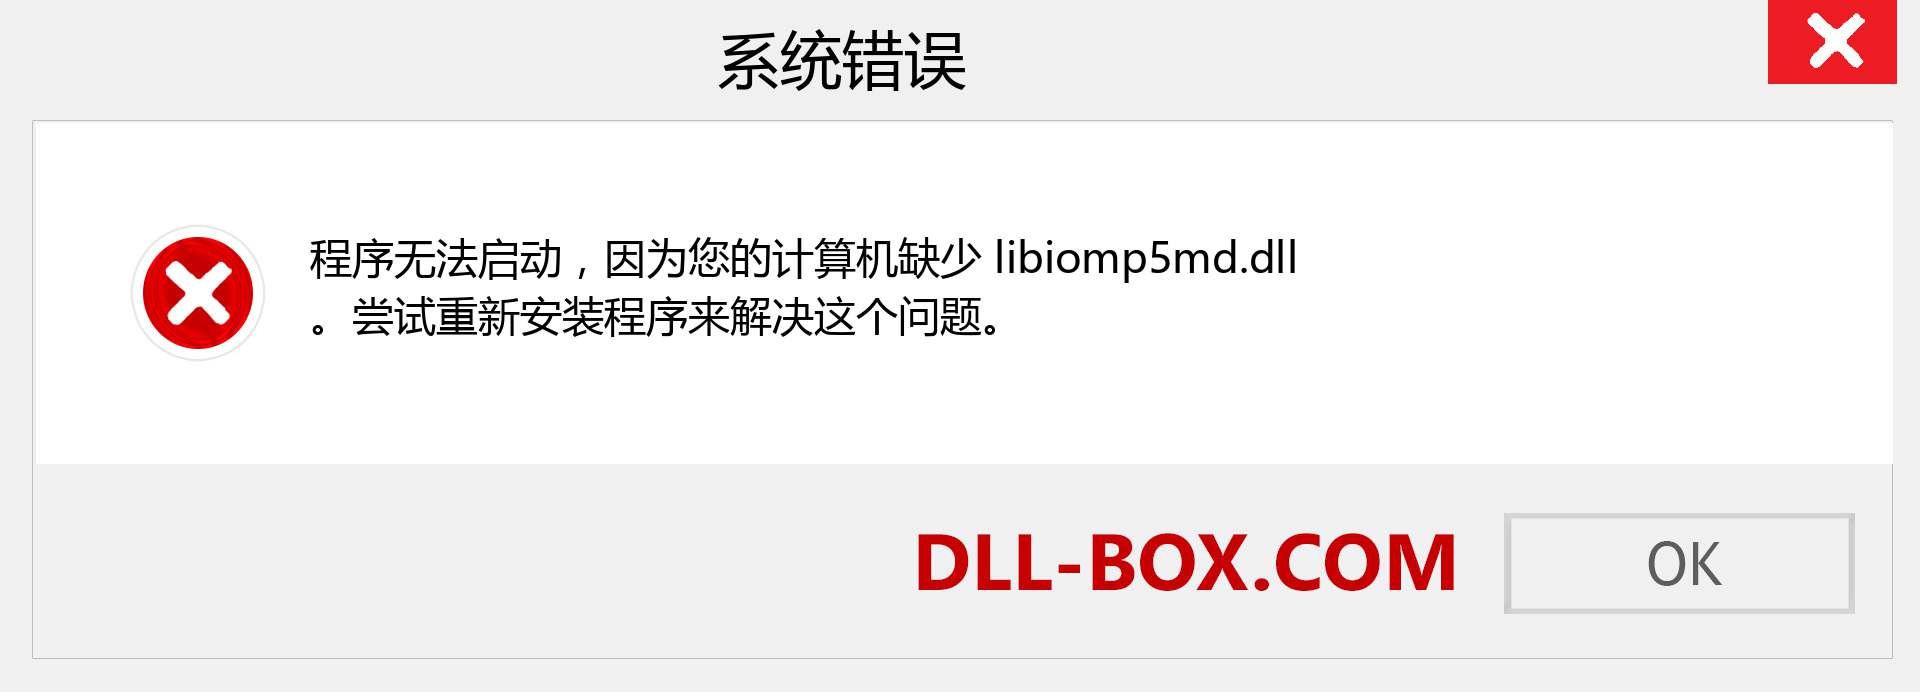 libiomp5md.dll 文件丢失？。 适用于 Windows 7、8、10 的下载 - 修复 Windows、照片、图像上的 libiomp5md dll 丢失错误